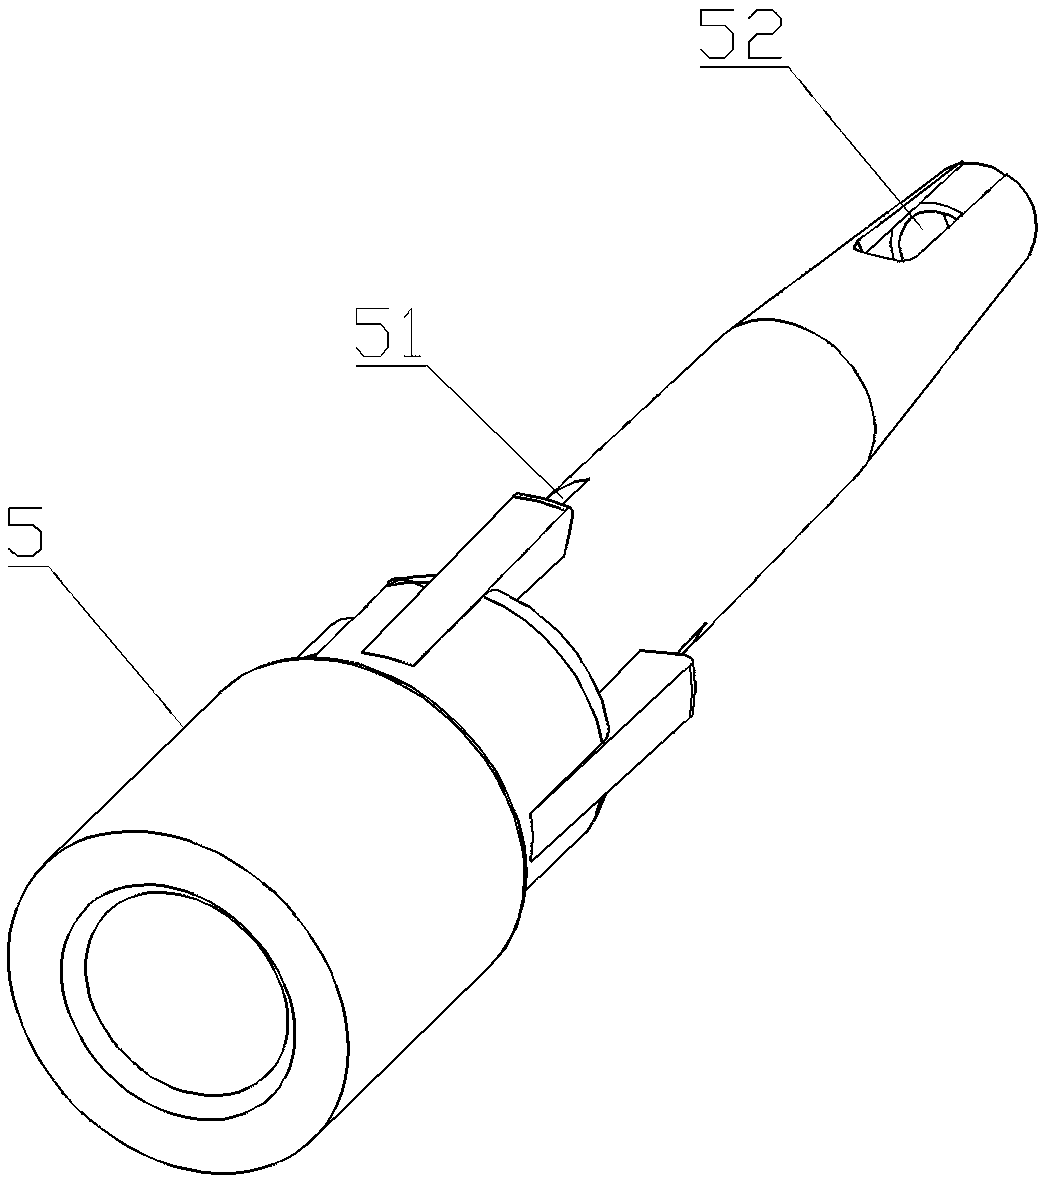 Drug preparing syringe with exhaust function